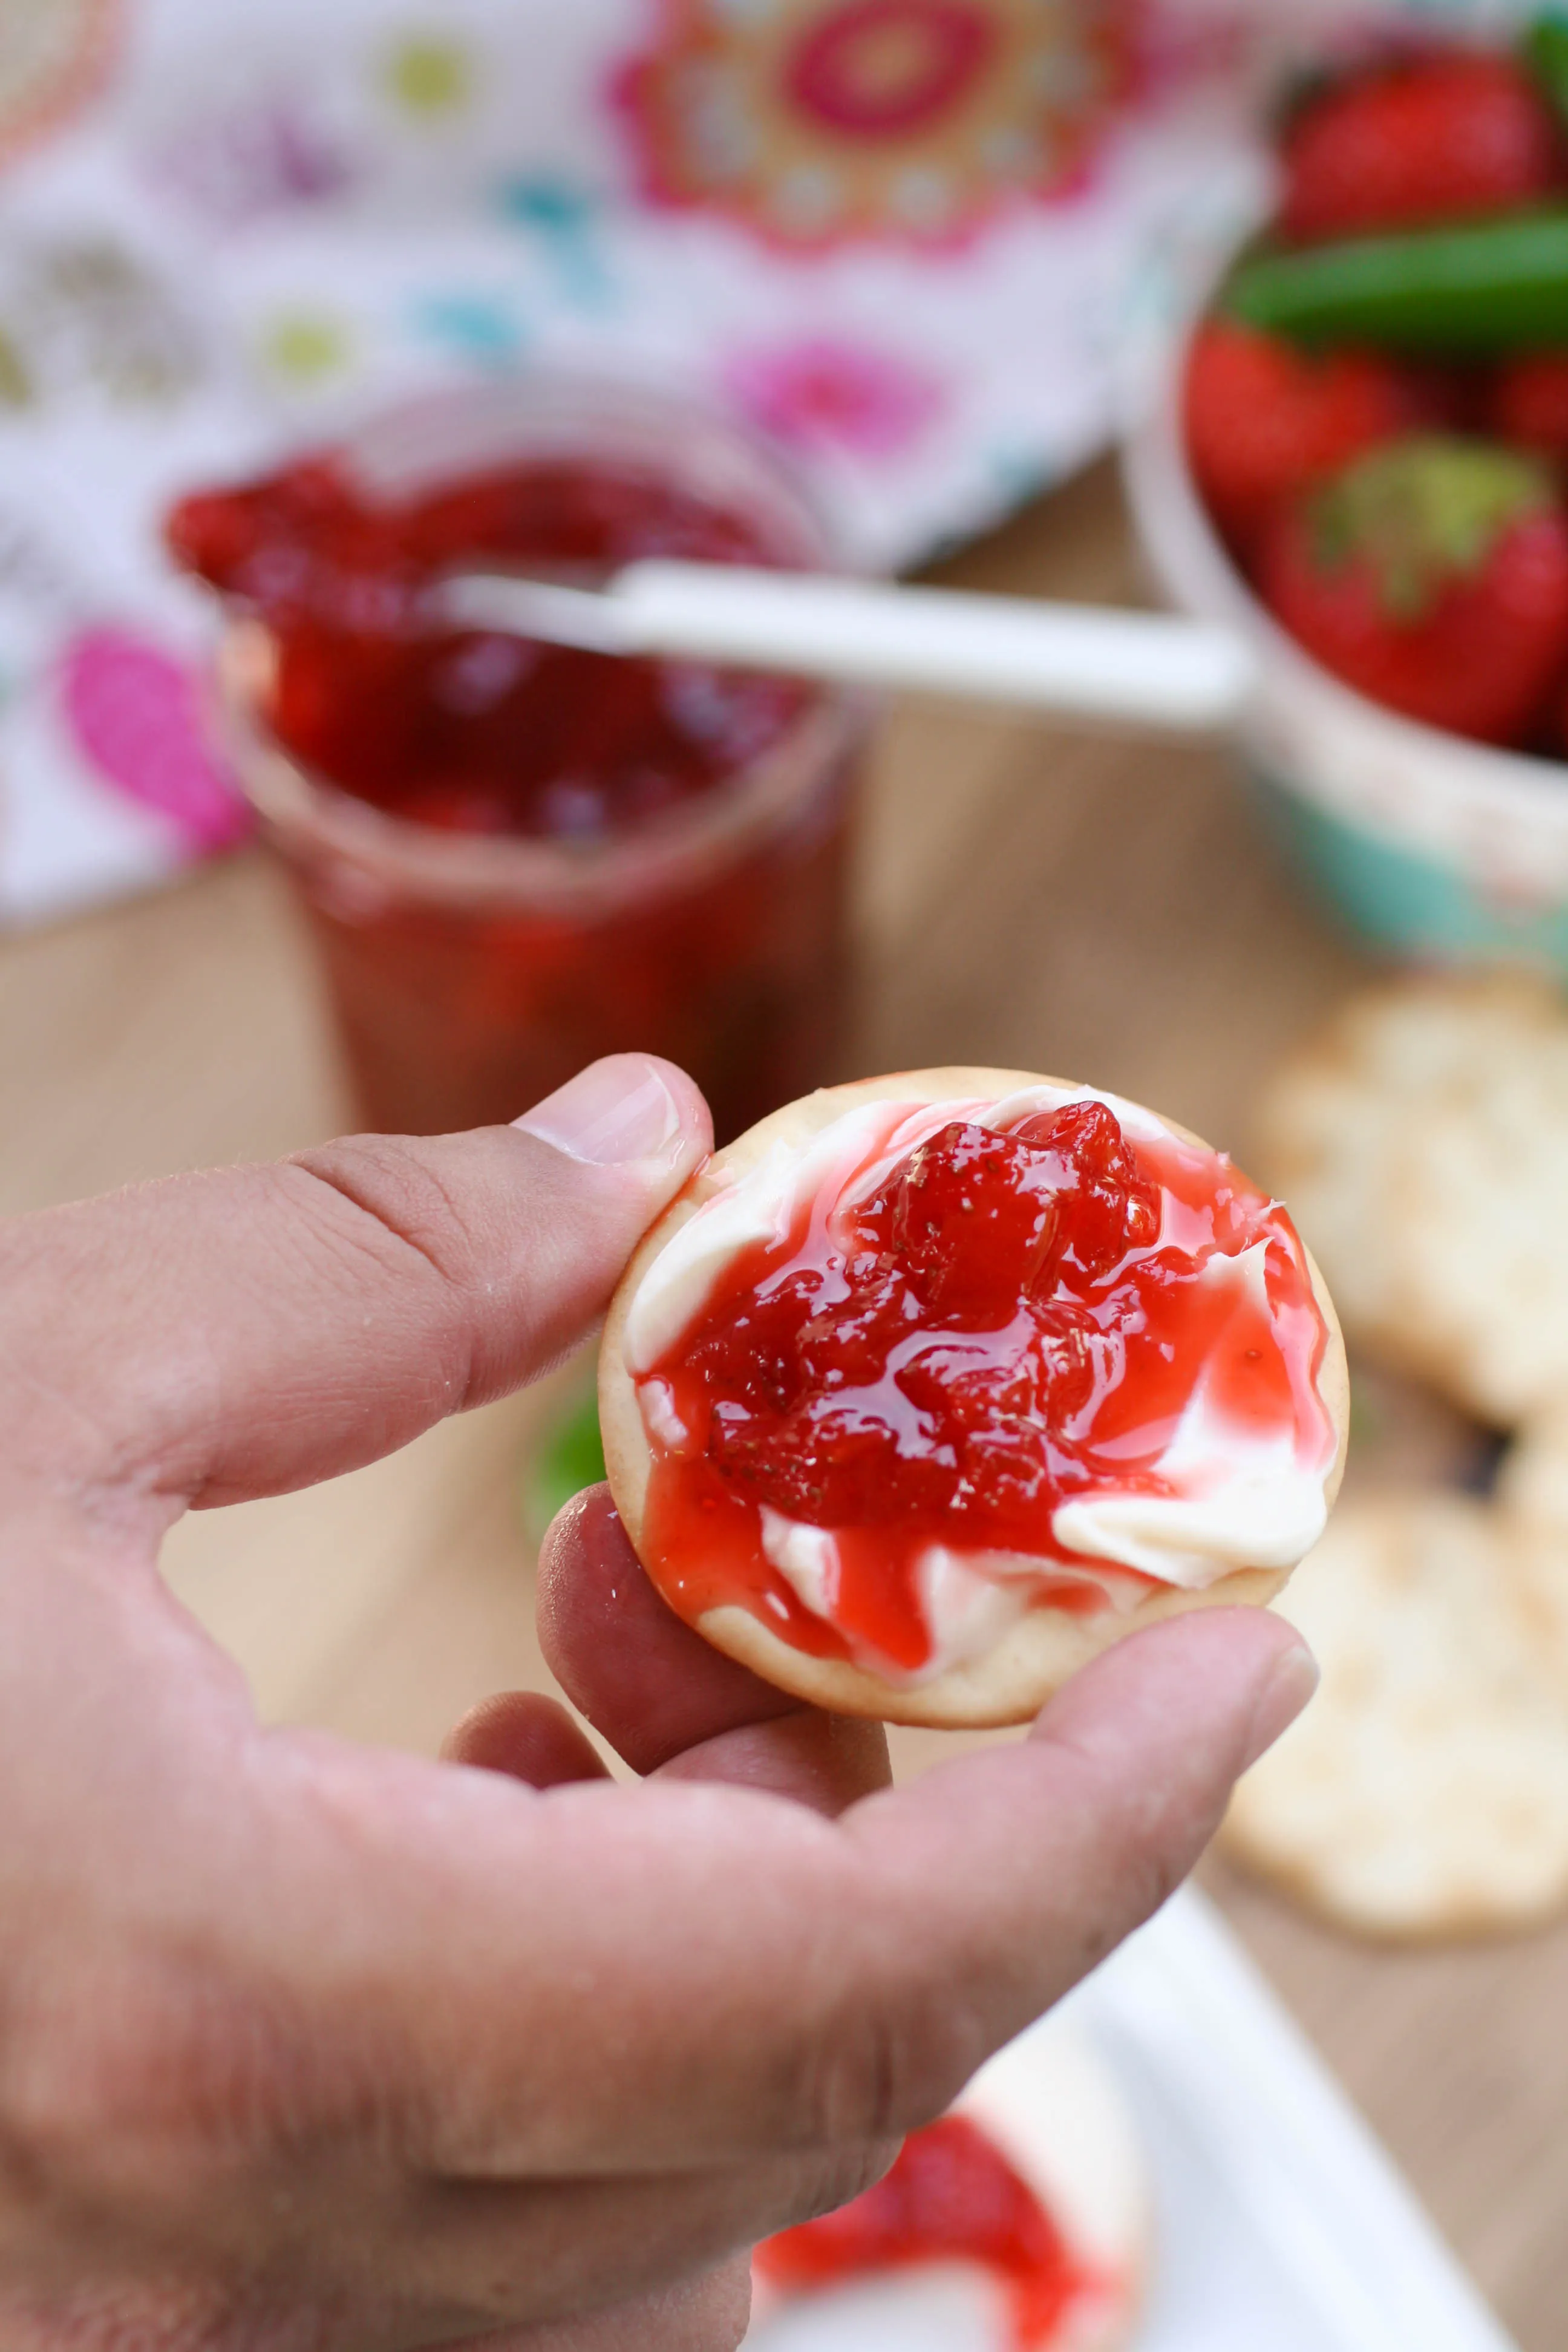 Small Batch Strawberry-Serrano Refrigerator Jam is easy to make. It's a wonderful seasonal treat!